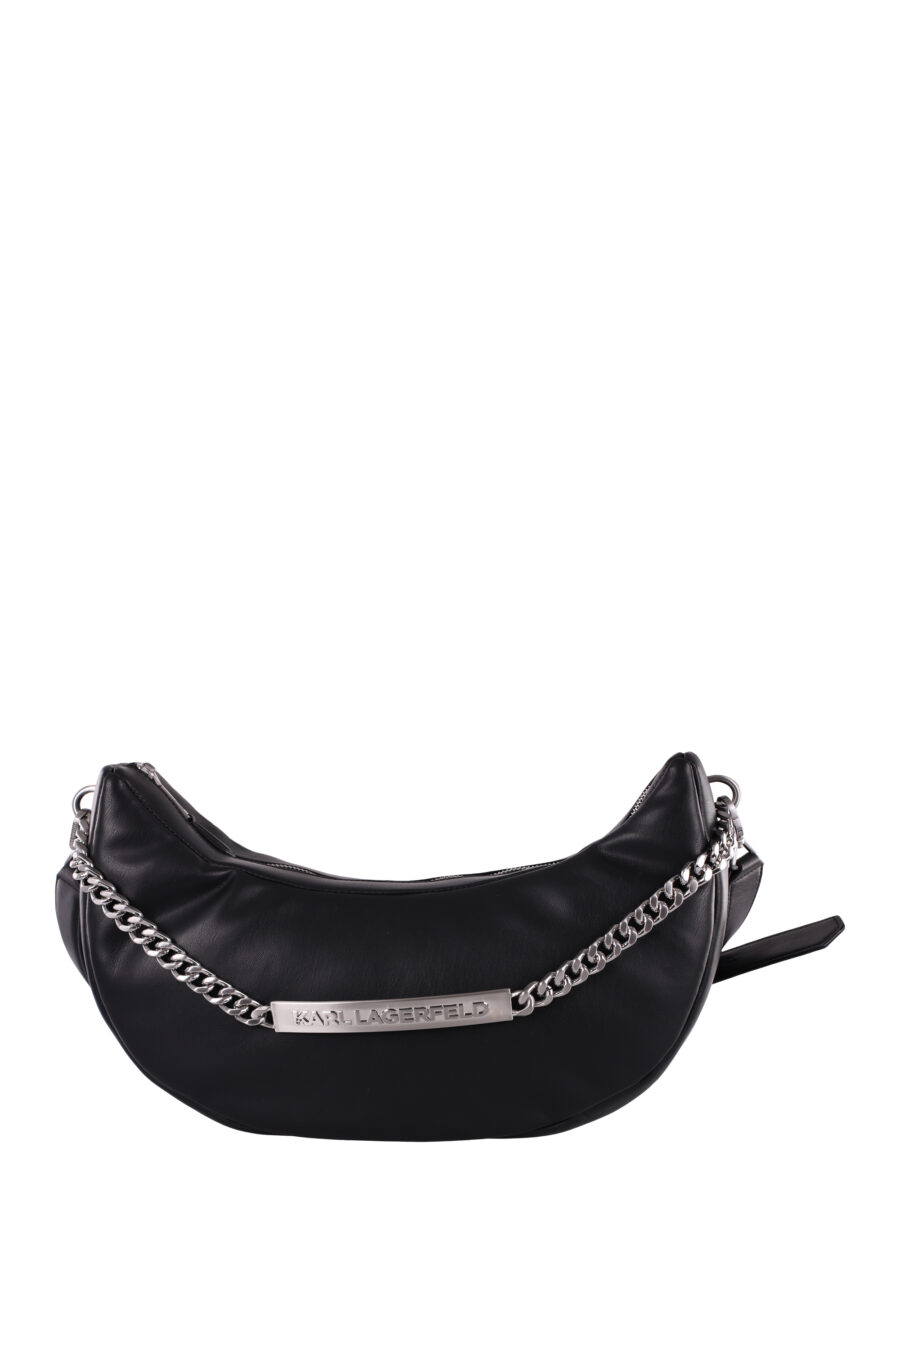 Bolso bandolera negro estilo hobo con cadena plateada - IMG 6042